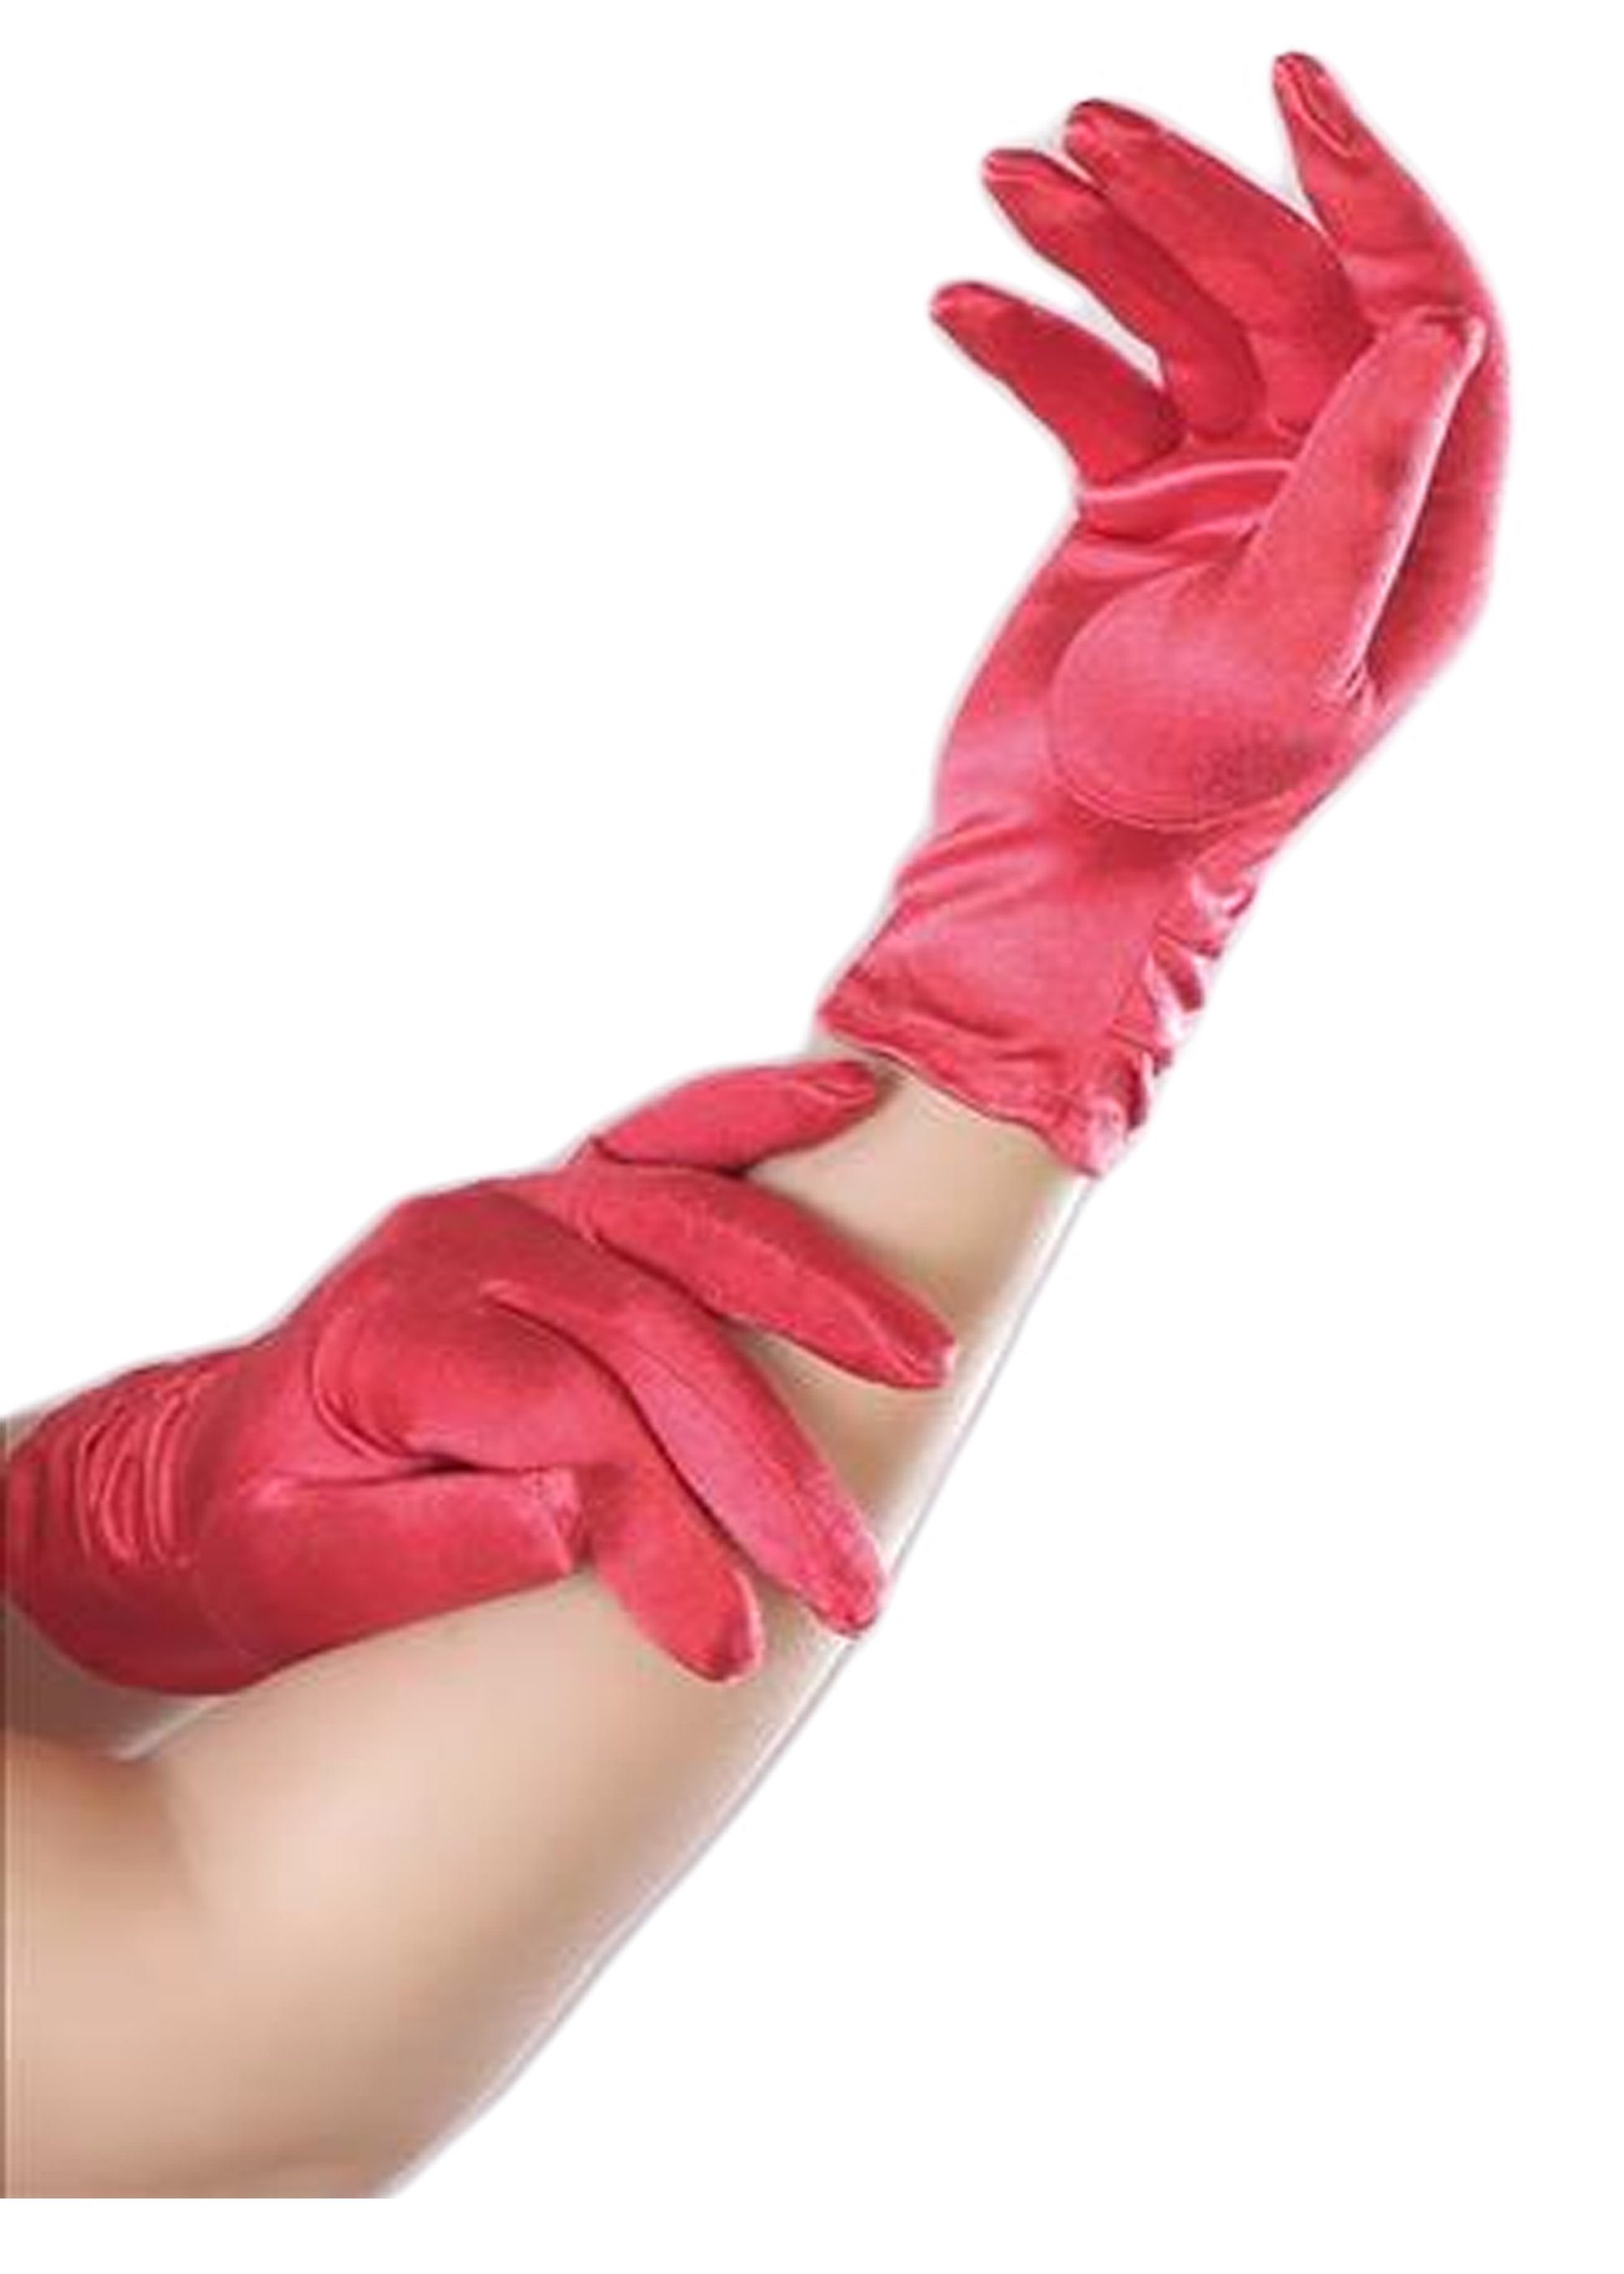 Family Trends Abendhandschuhe Handschuhe Satin-Look Raffung Damen kurz mit im dehnbar Satin rot